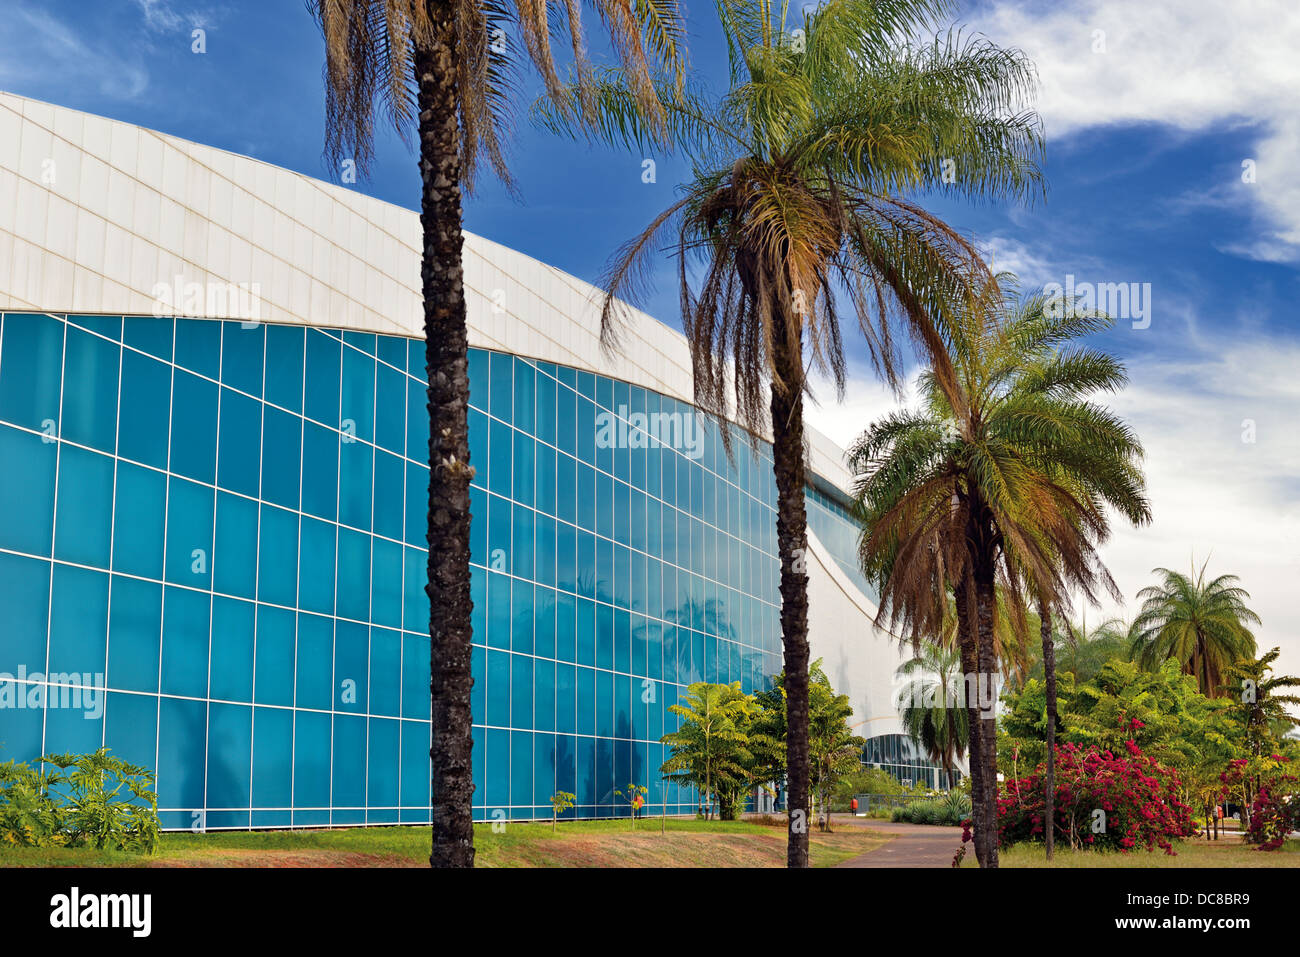 Brasil, Brasilia: vista exterior de la arquitectura moderna del Centro de Convenciones Ulises Guimaraes Foto de stock